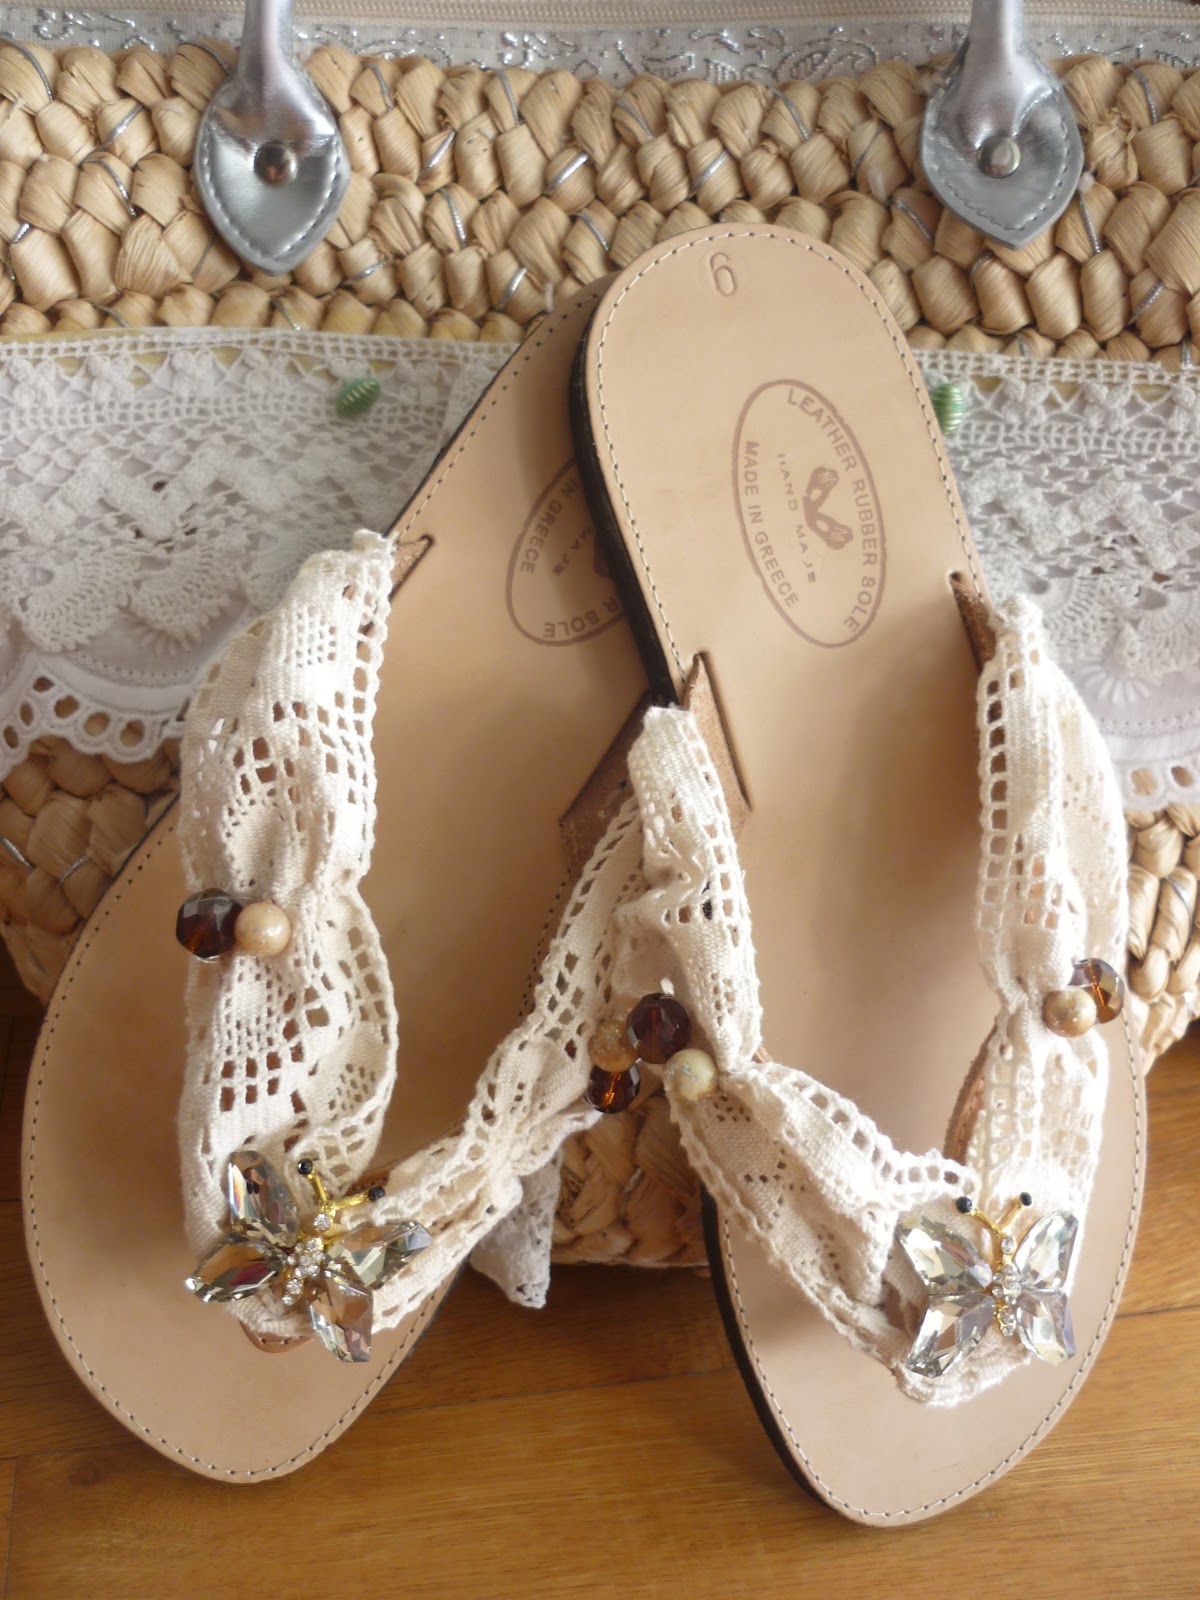 Handmade Sandals by Elizabeth 2012